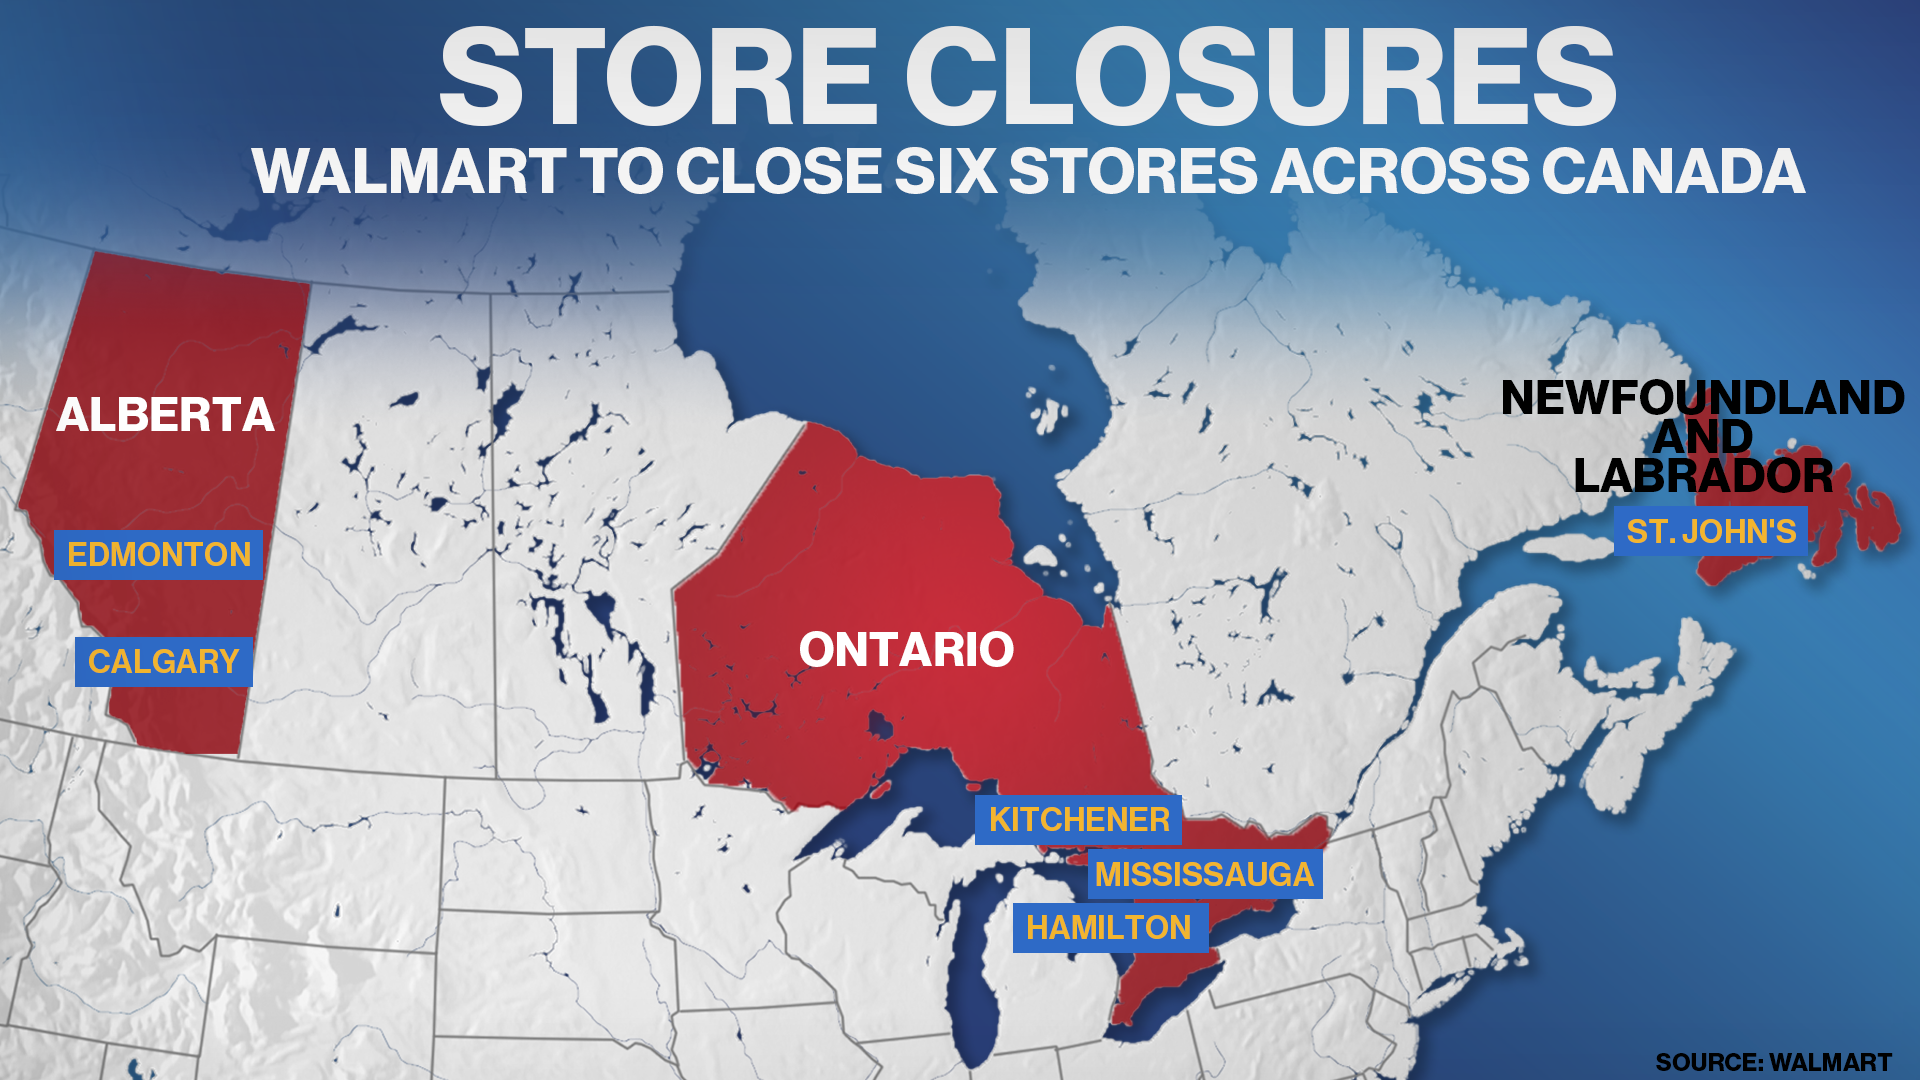 Walmart spending $500M on Canadian store upgrades, closing six